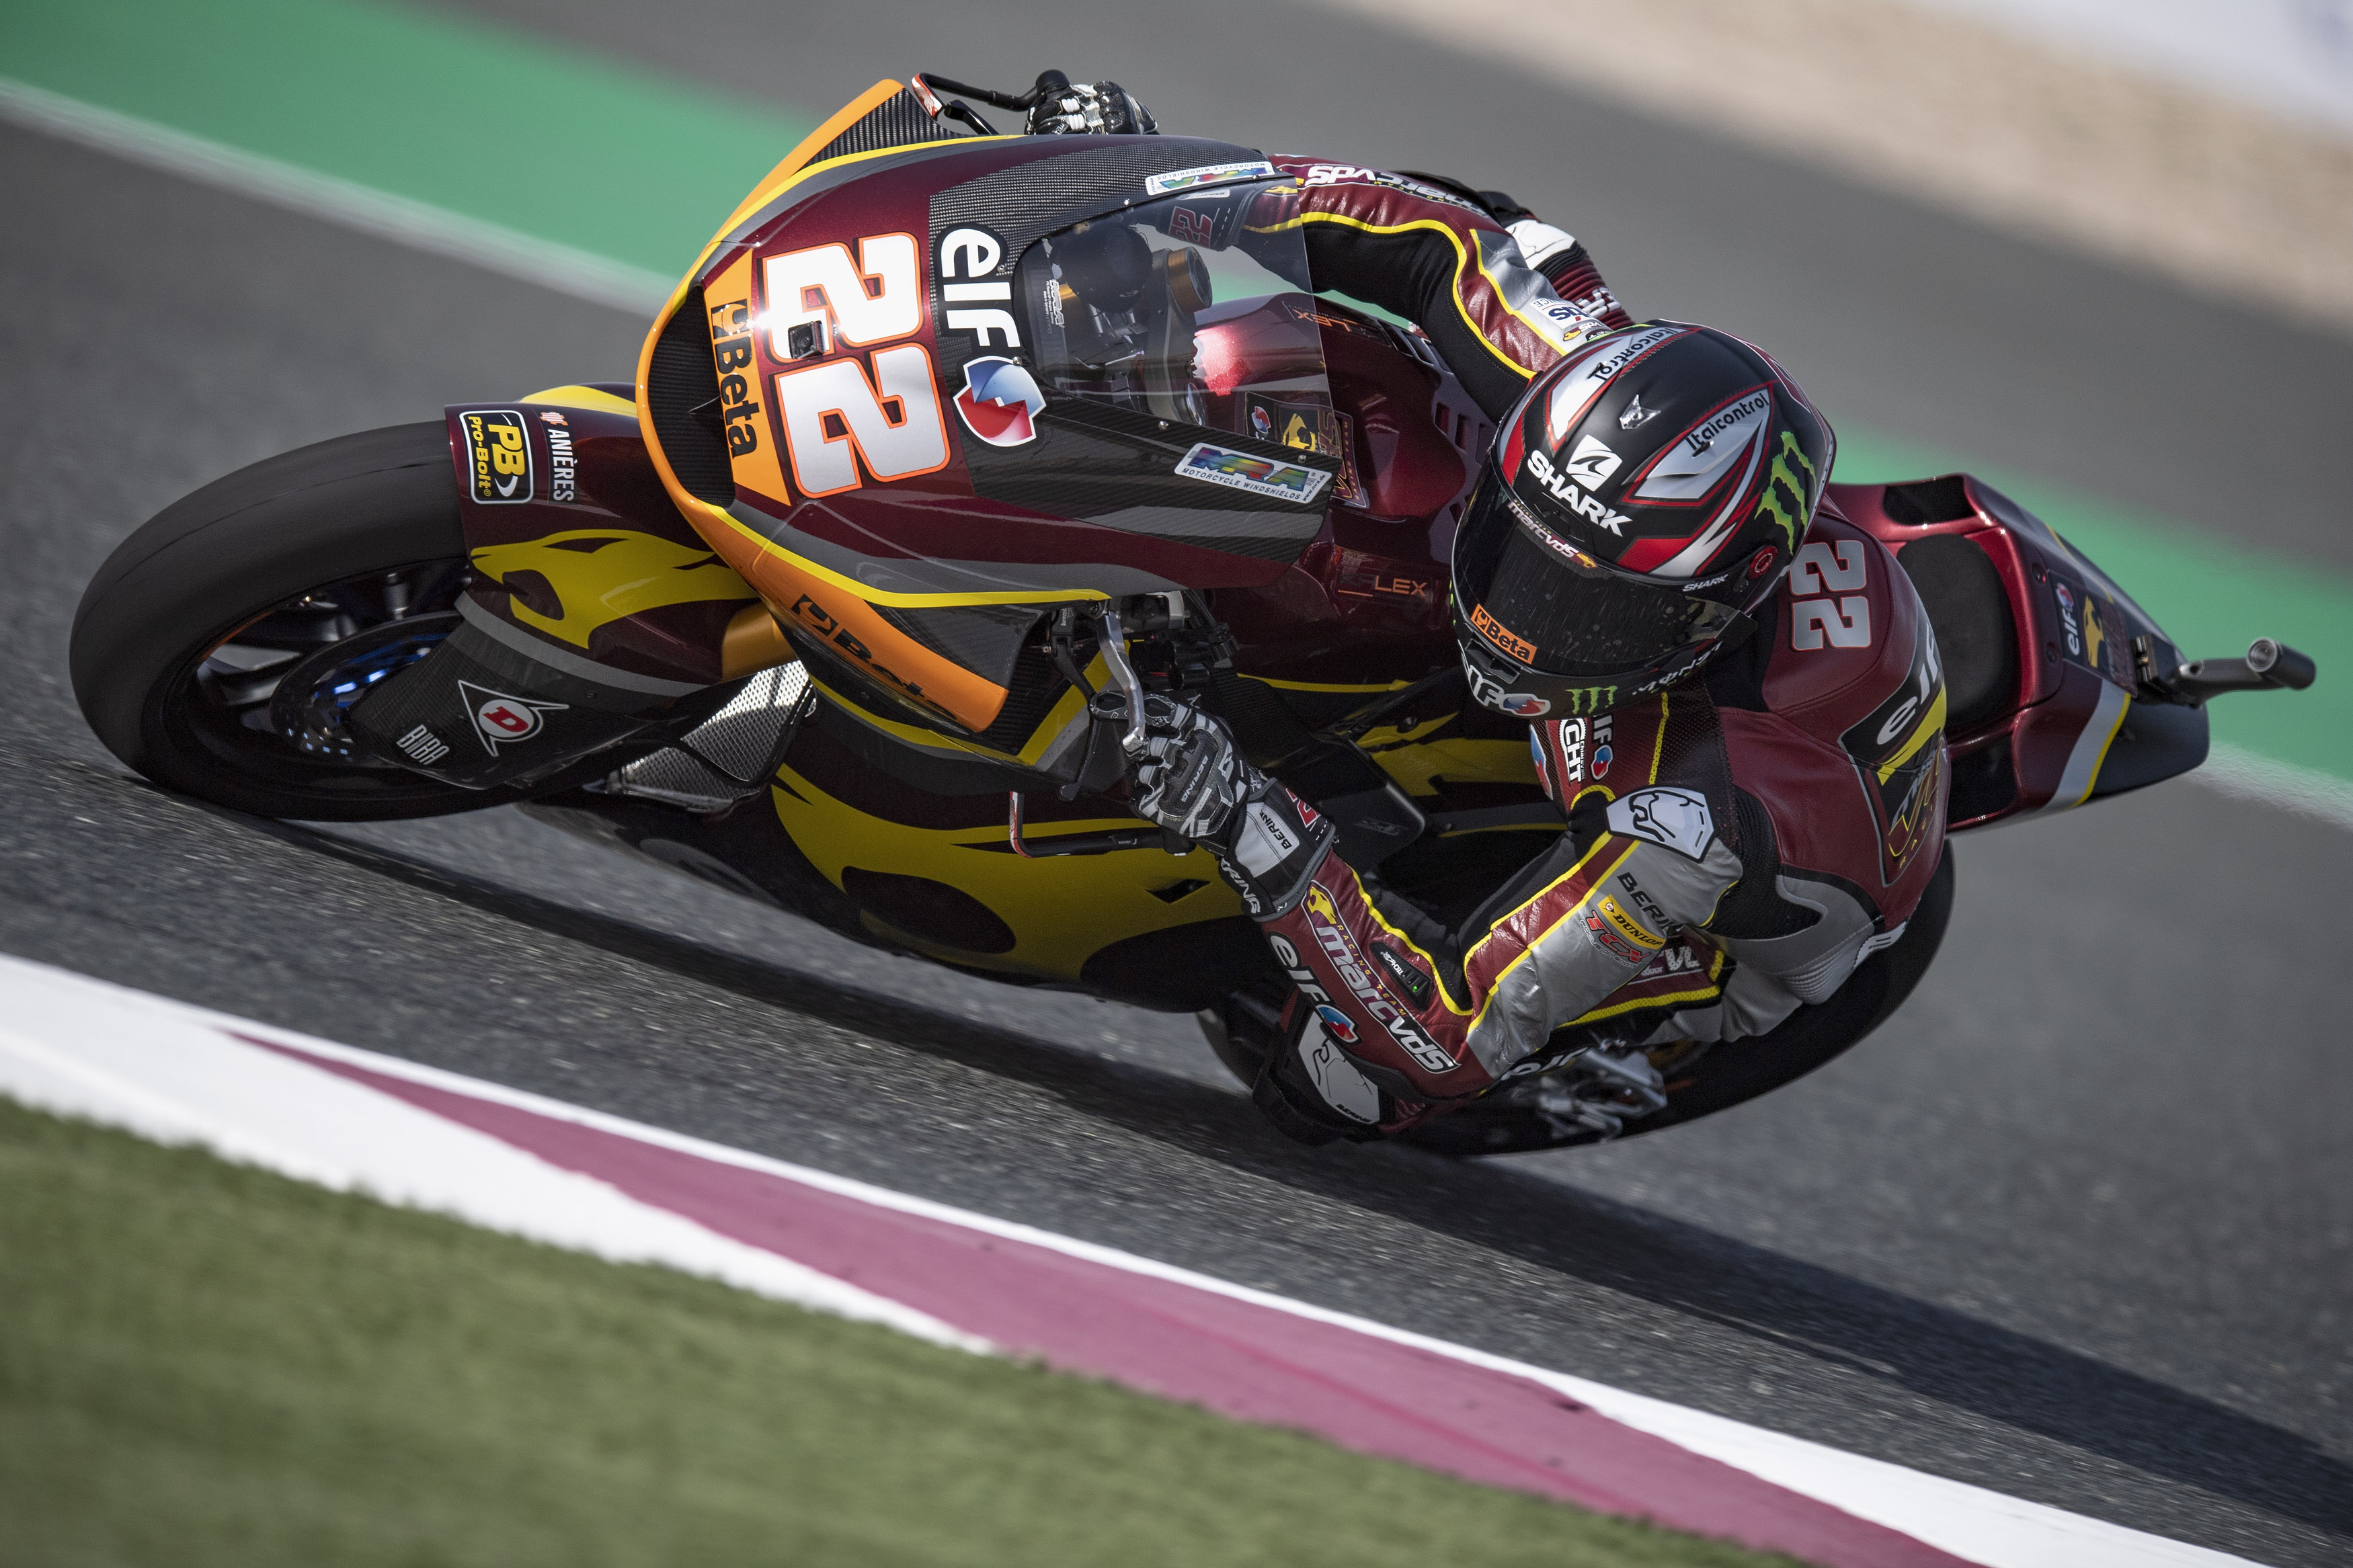 Hasil Kualifikasi Moto2 GP Qatar 2021: Sam Lowes Pole Position, Pembalap Pertamina Mandalika SAG Team Tembus 3 Besar